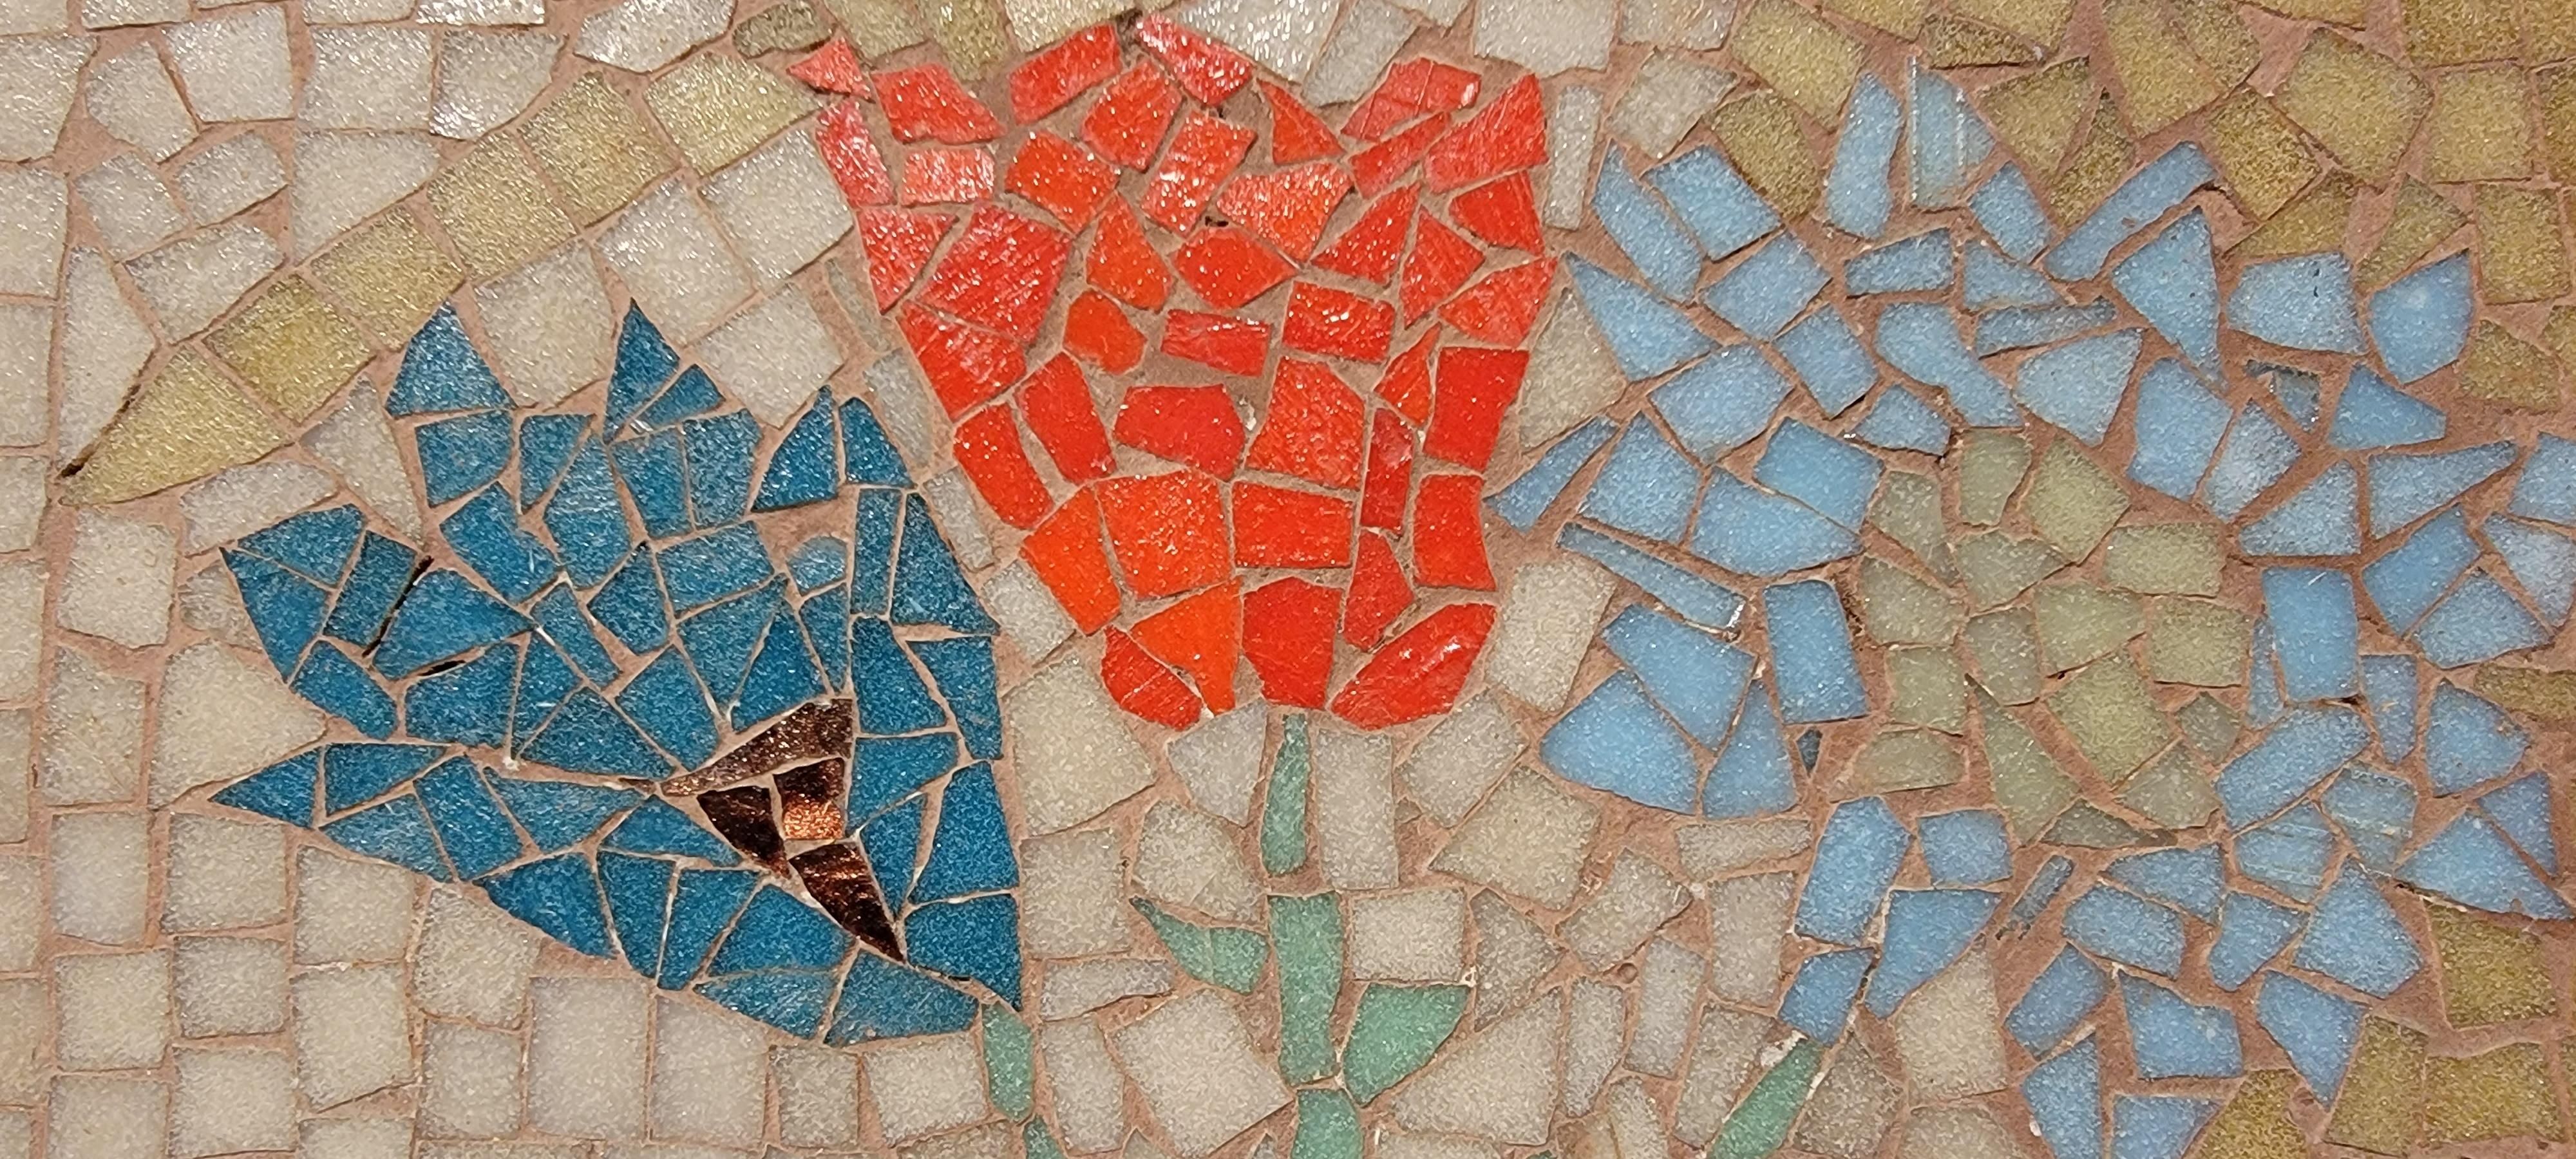 floral mosaic tile flooring animal crossing